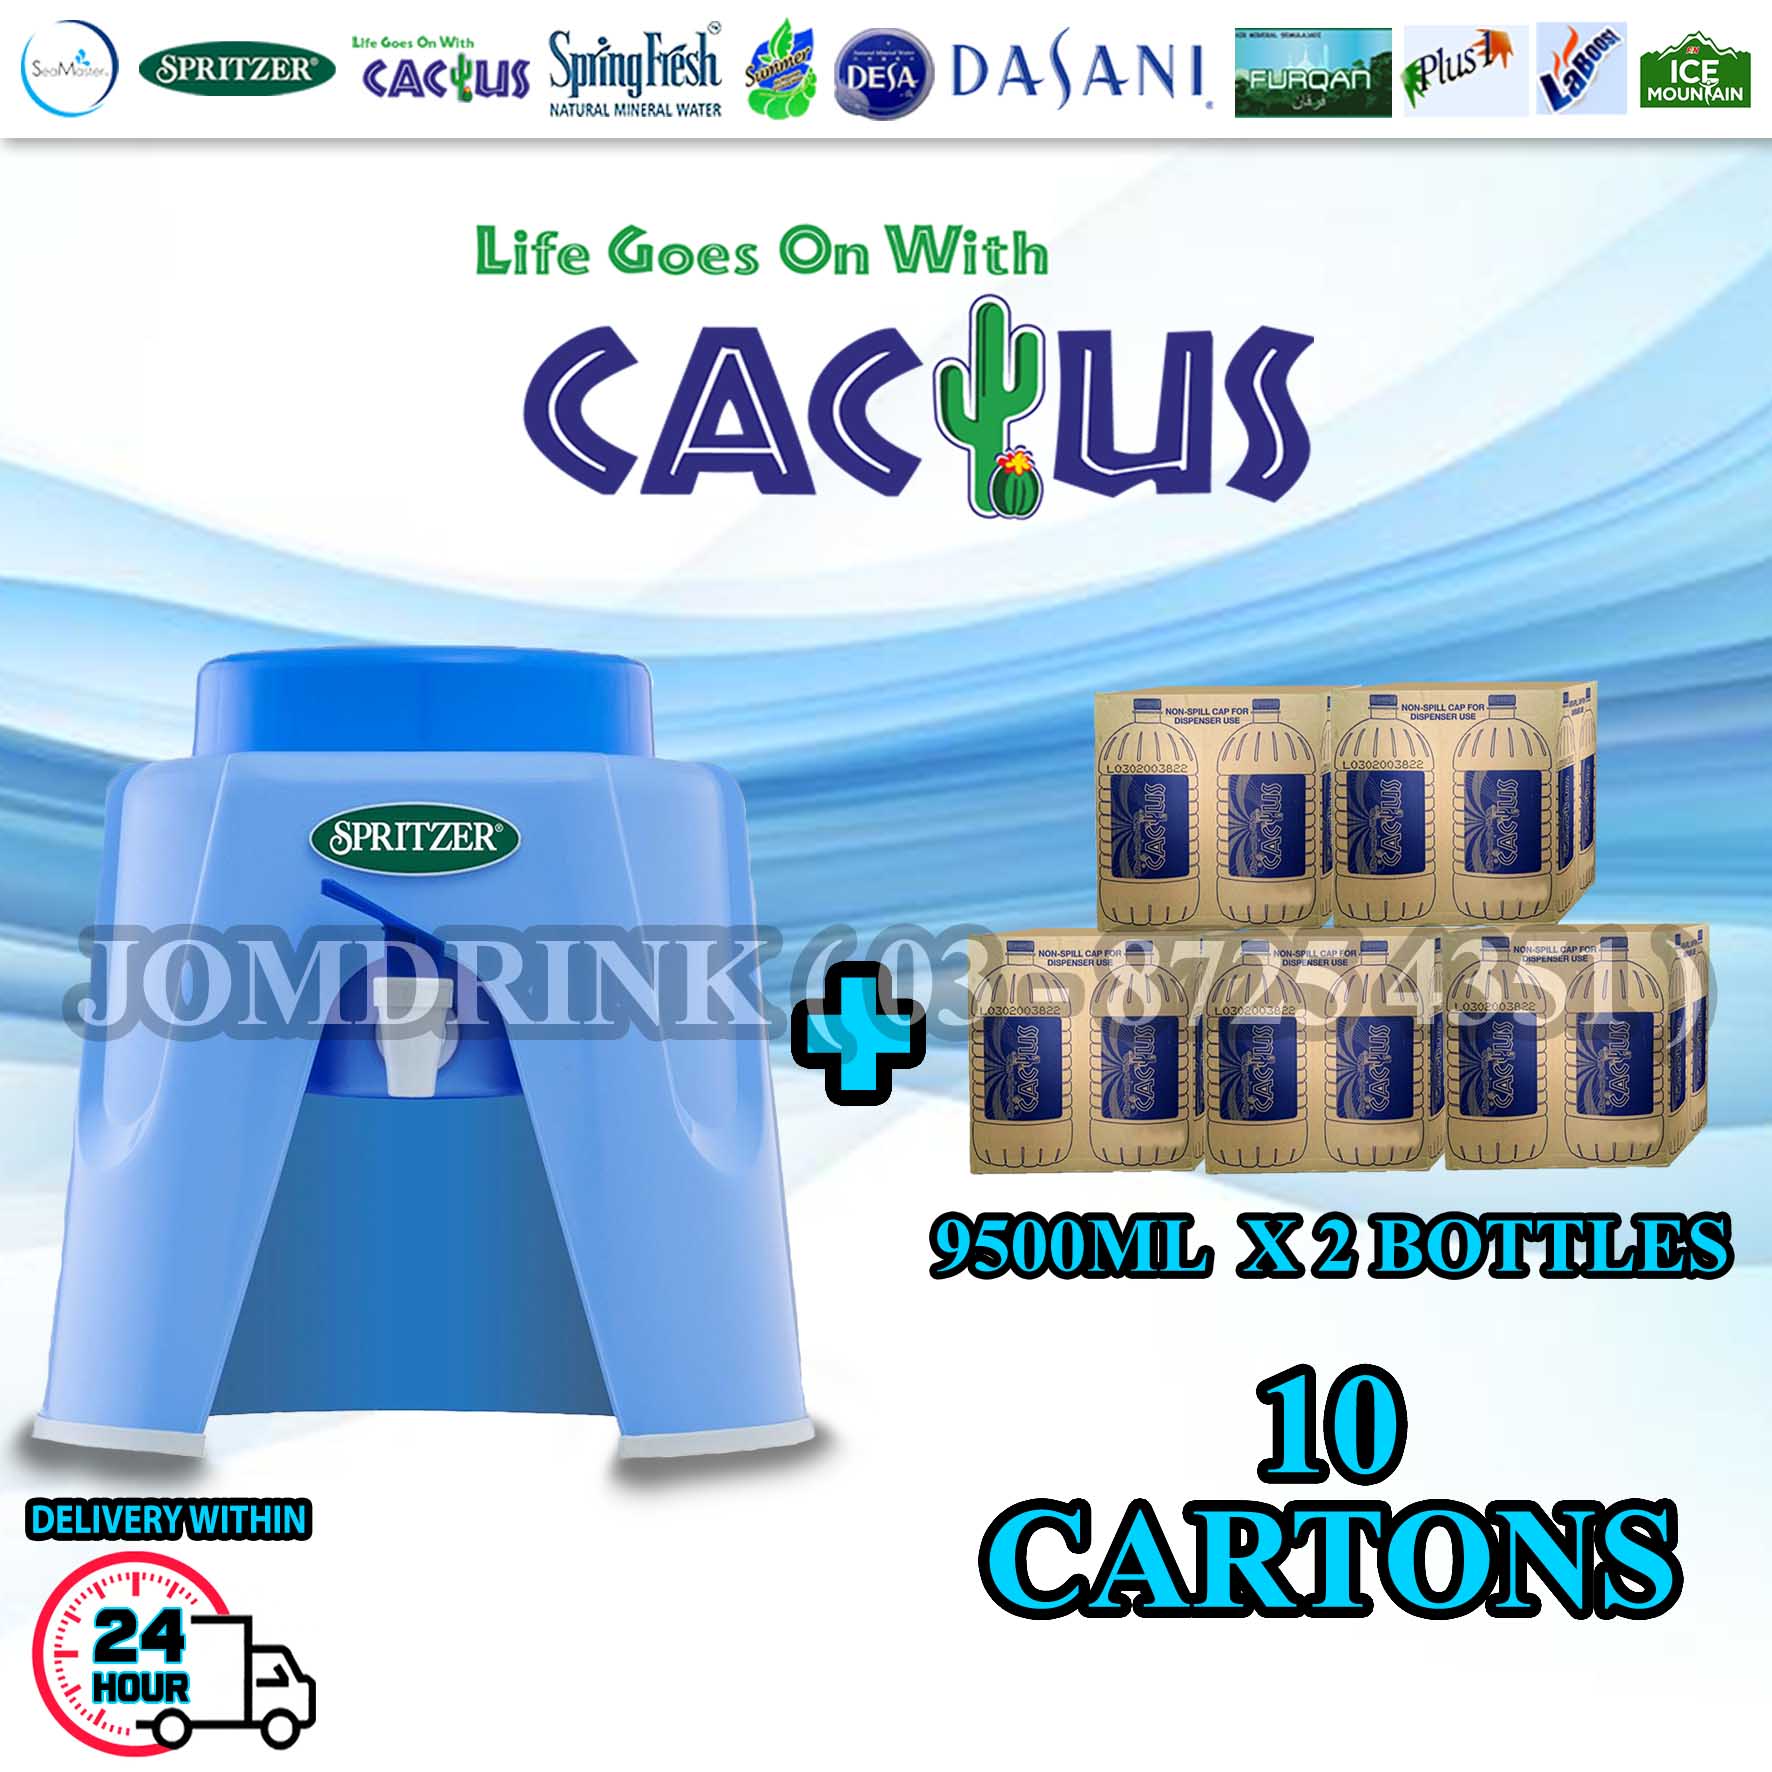 SPRITZER DISPENSER + PACKAGE OF 10 CARTON MINERAL WATER CACTUS 9.5L x 2 BOTTLES